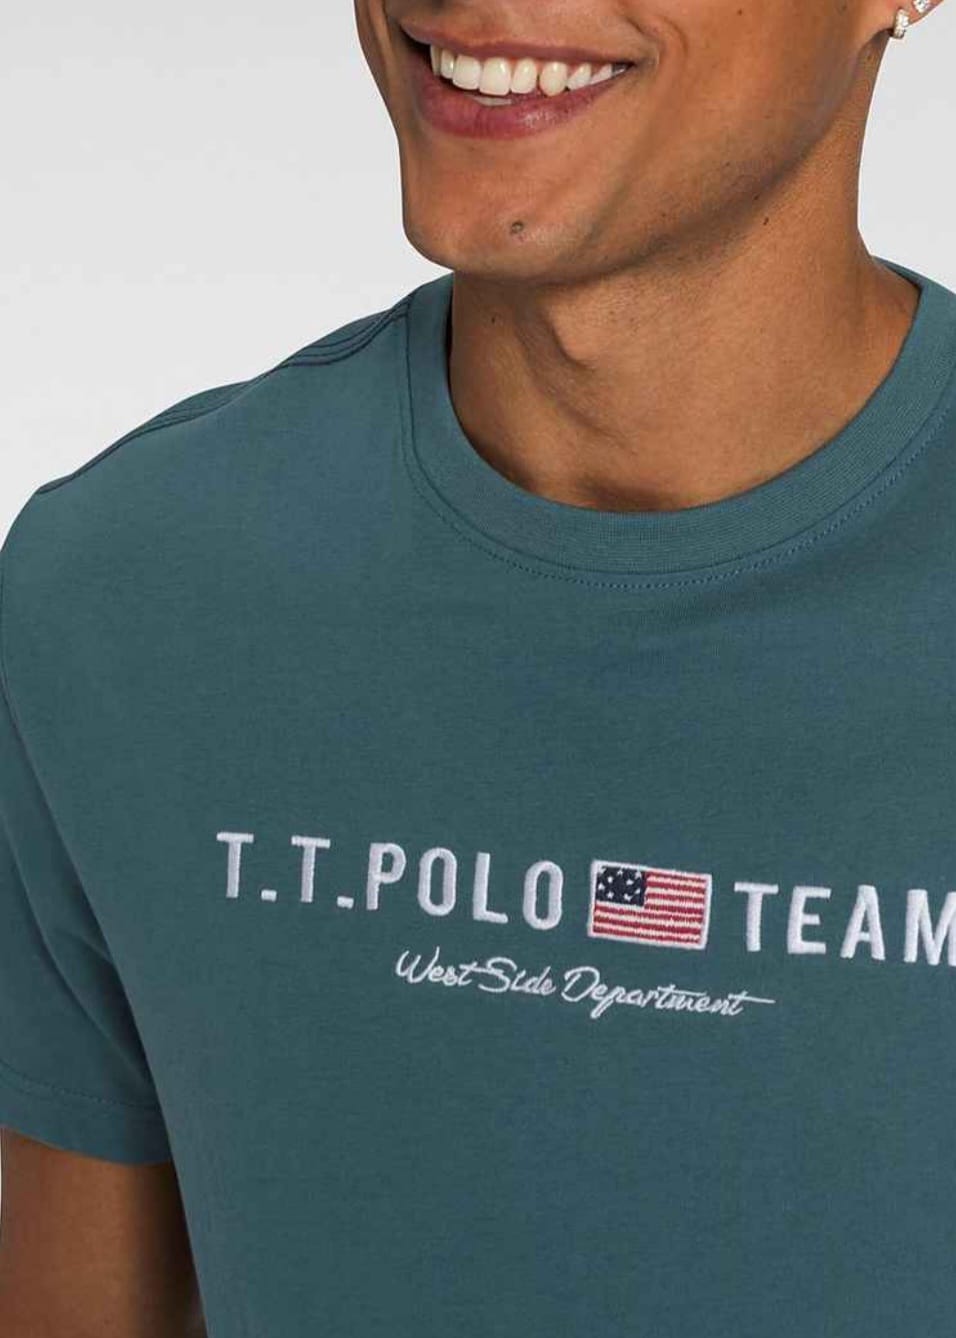 Tom Tailor Polo Team T,Shirt